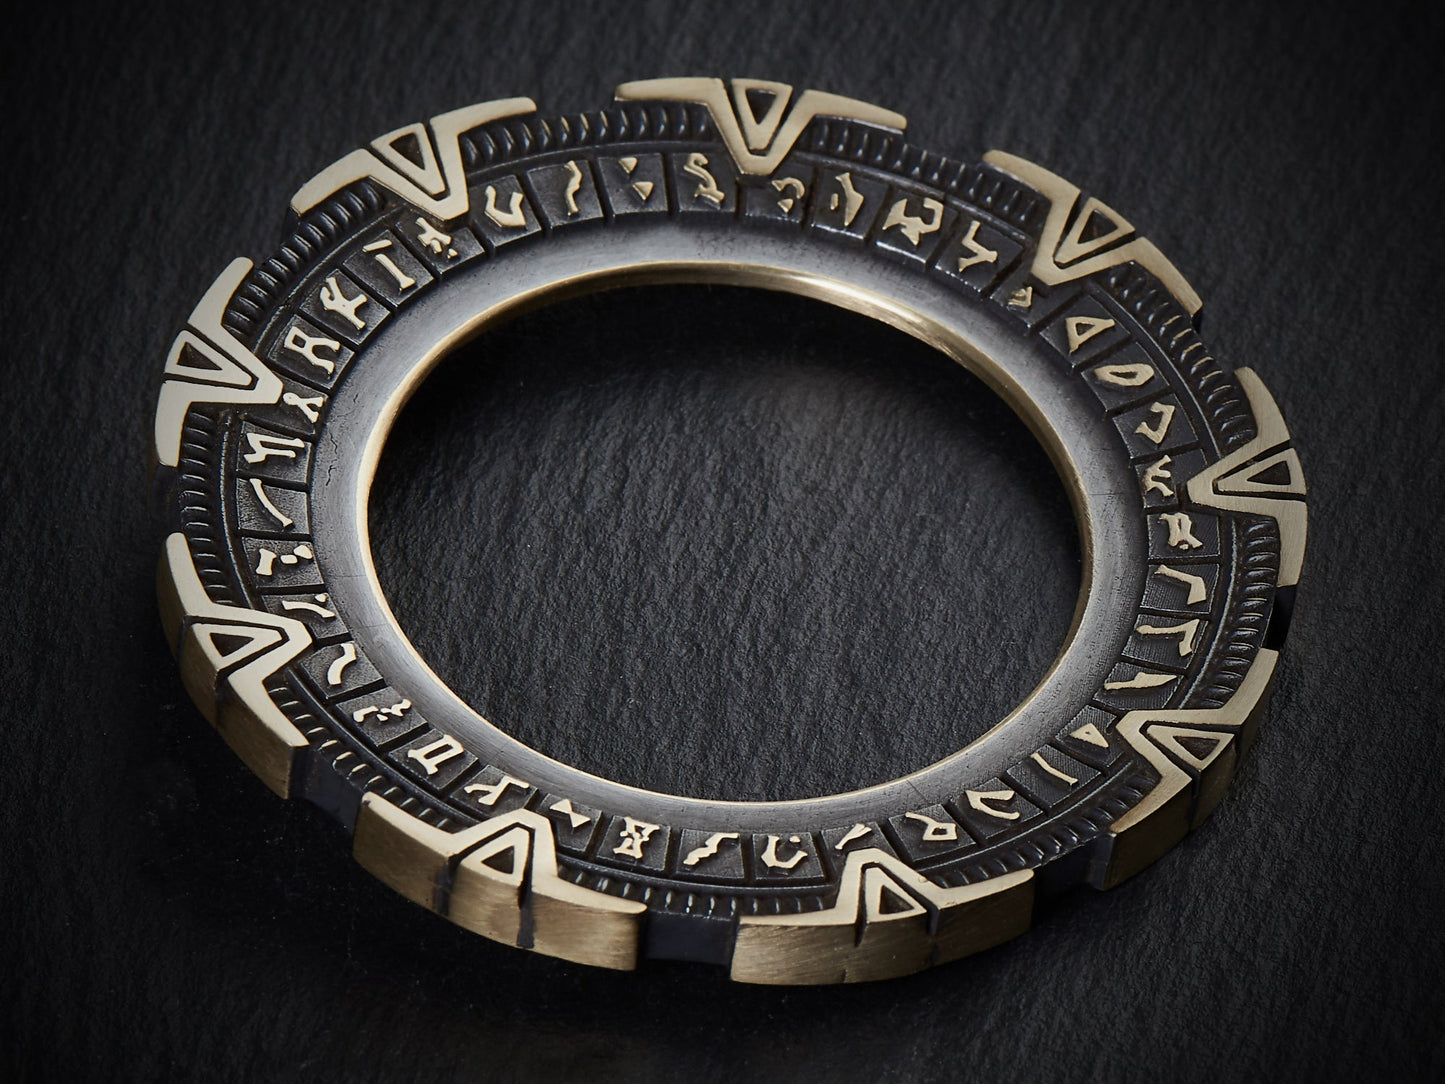 925 Sterling Silver / Brass Premium Quality Stargate SG1 Atlantis Universe Portal Pendant Necklace - Stargate Atlantis Jewelry Charm Amulet - Stargate Merchandise Cosplay - Baldur Jewelry